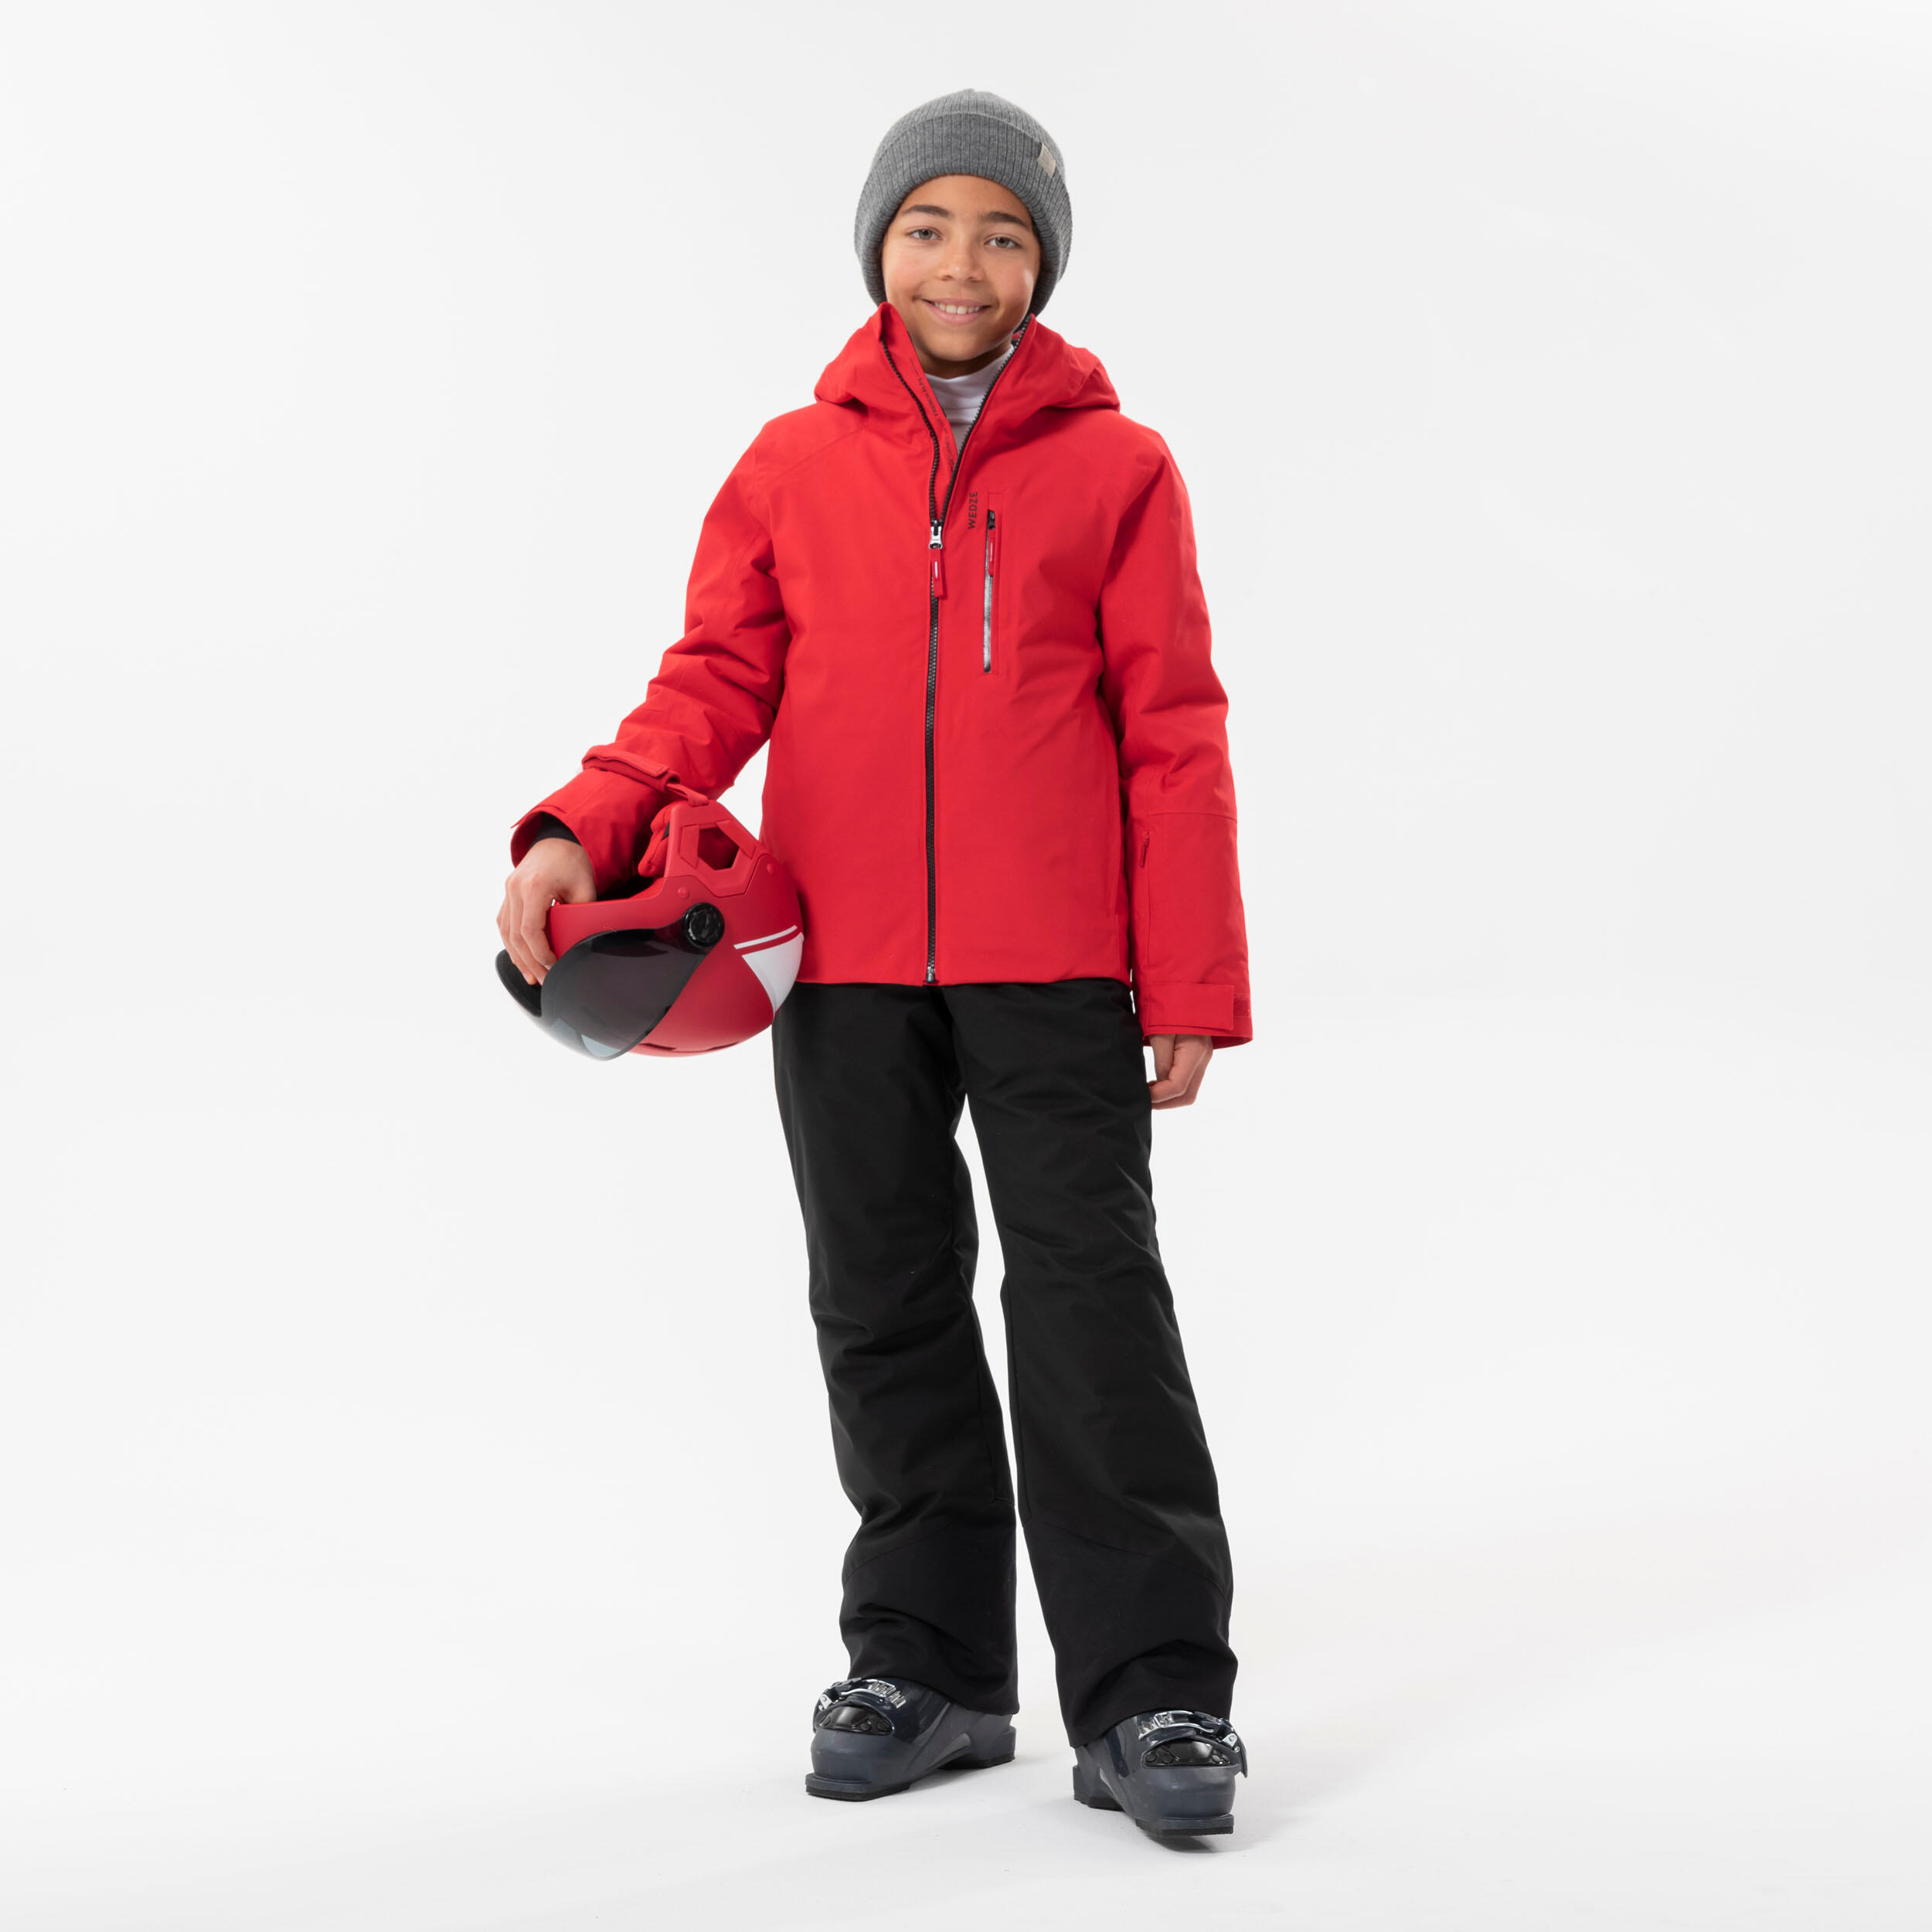 Kids’ Warm and Waterproof Ski Jacket 550 - Red 4/15